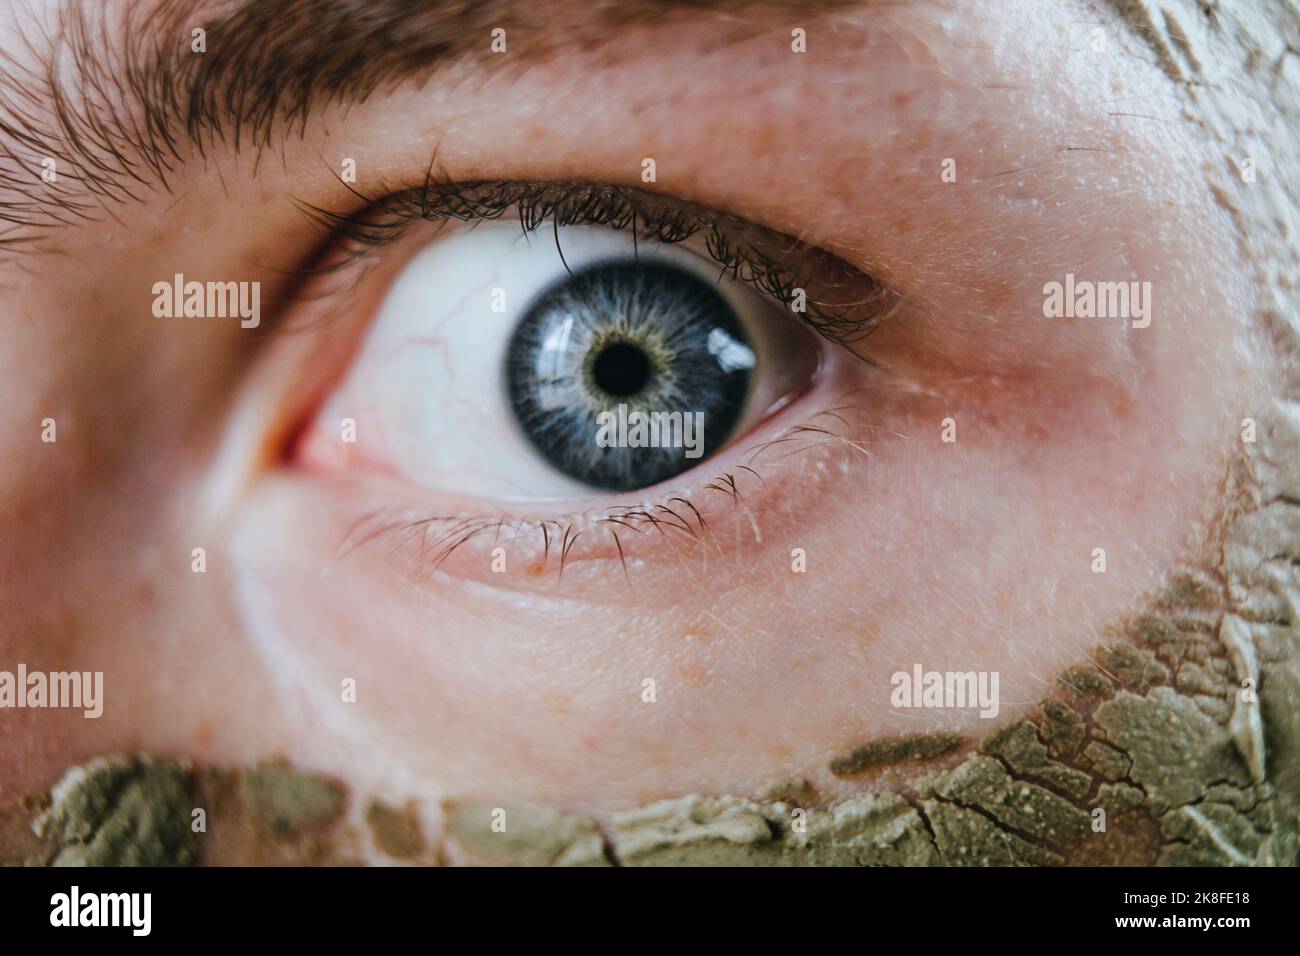 Gros plan de l'œil humain avec masque facial Banque D'Images